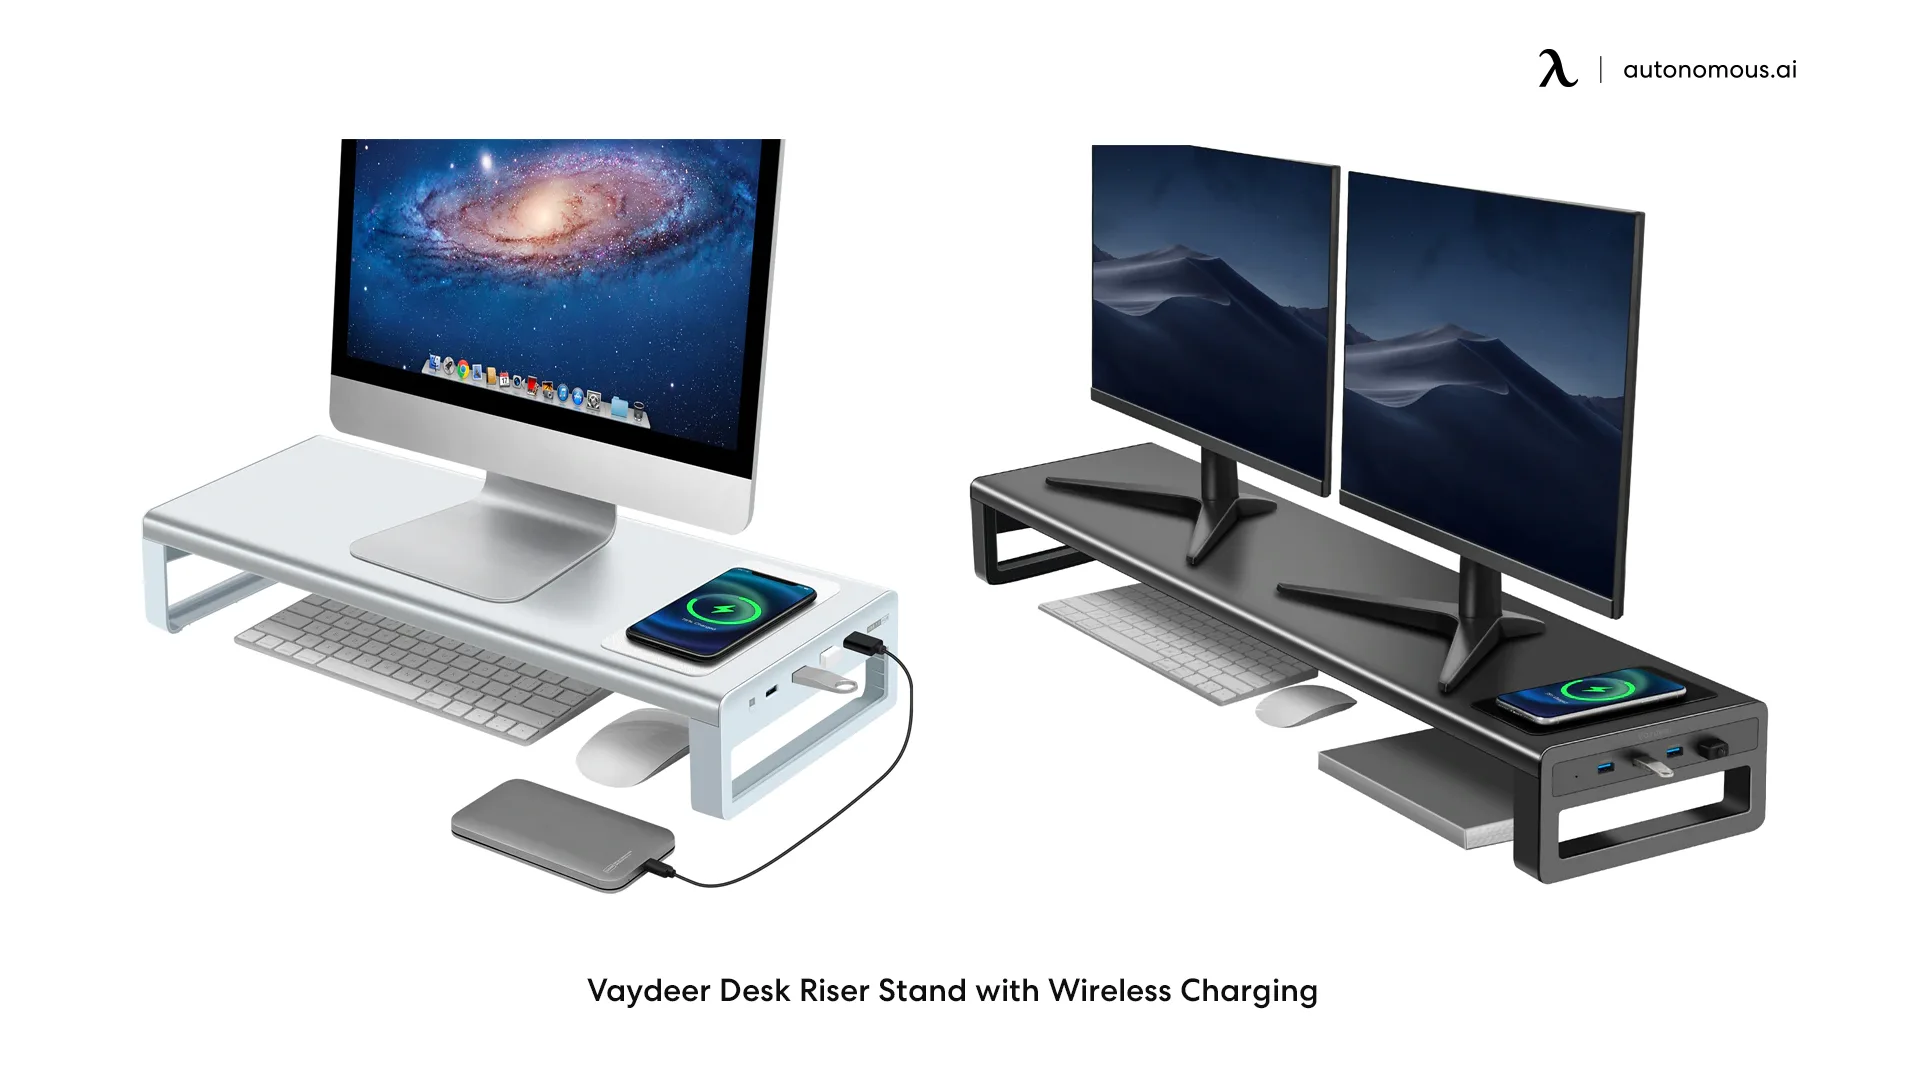 Vaydeer Desk Riser Stand with Wireless Charging